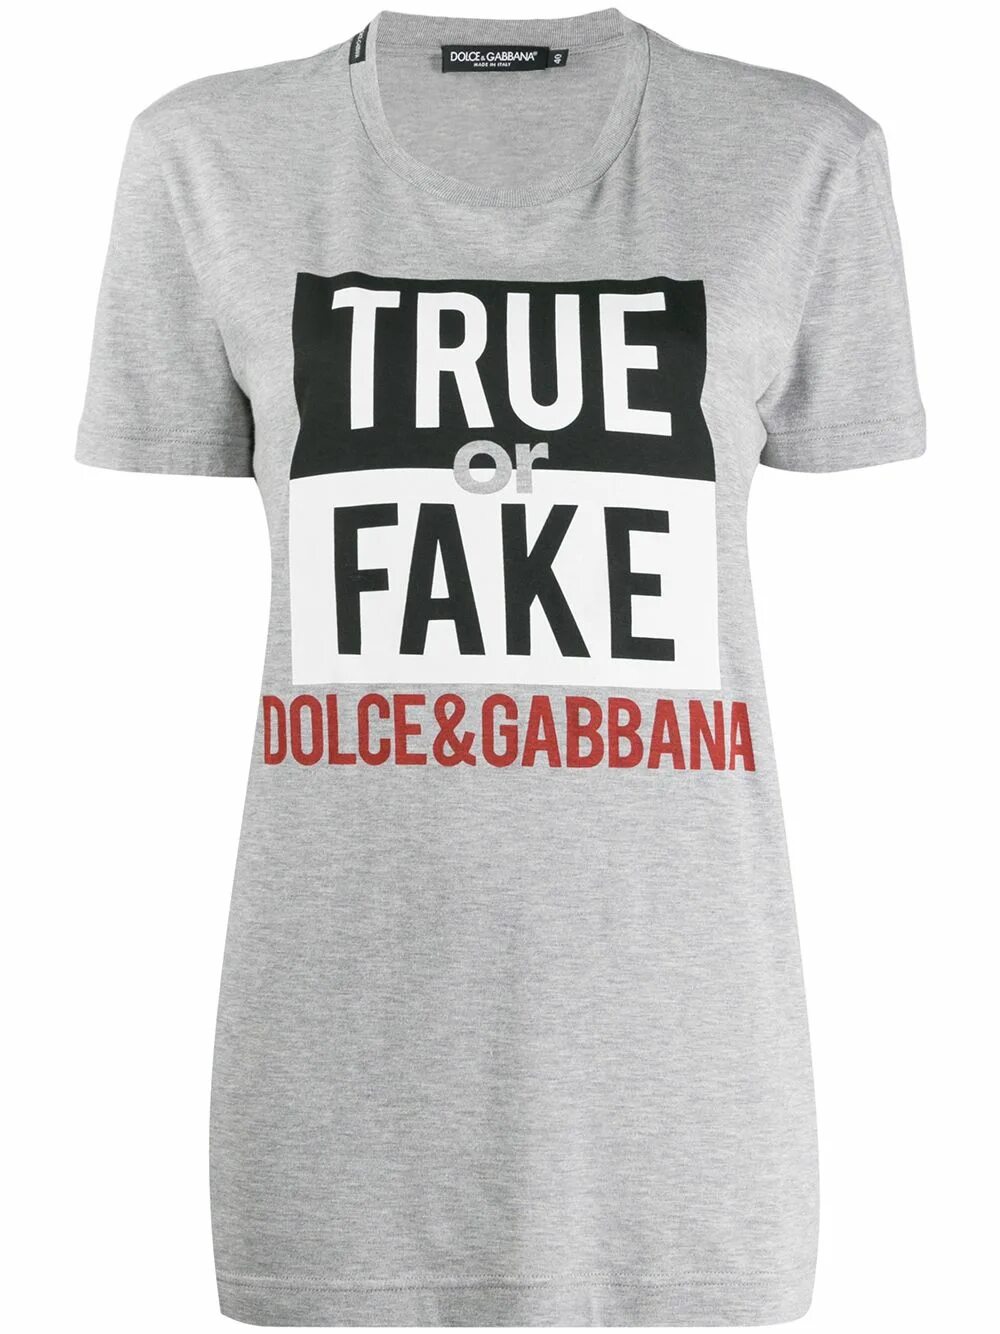 True collection. Футболка Dolce Gabbana. Dolce Gabbana футболка женская. Дольче Габбана майка футболка с женщиной.